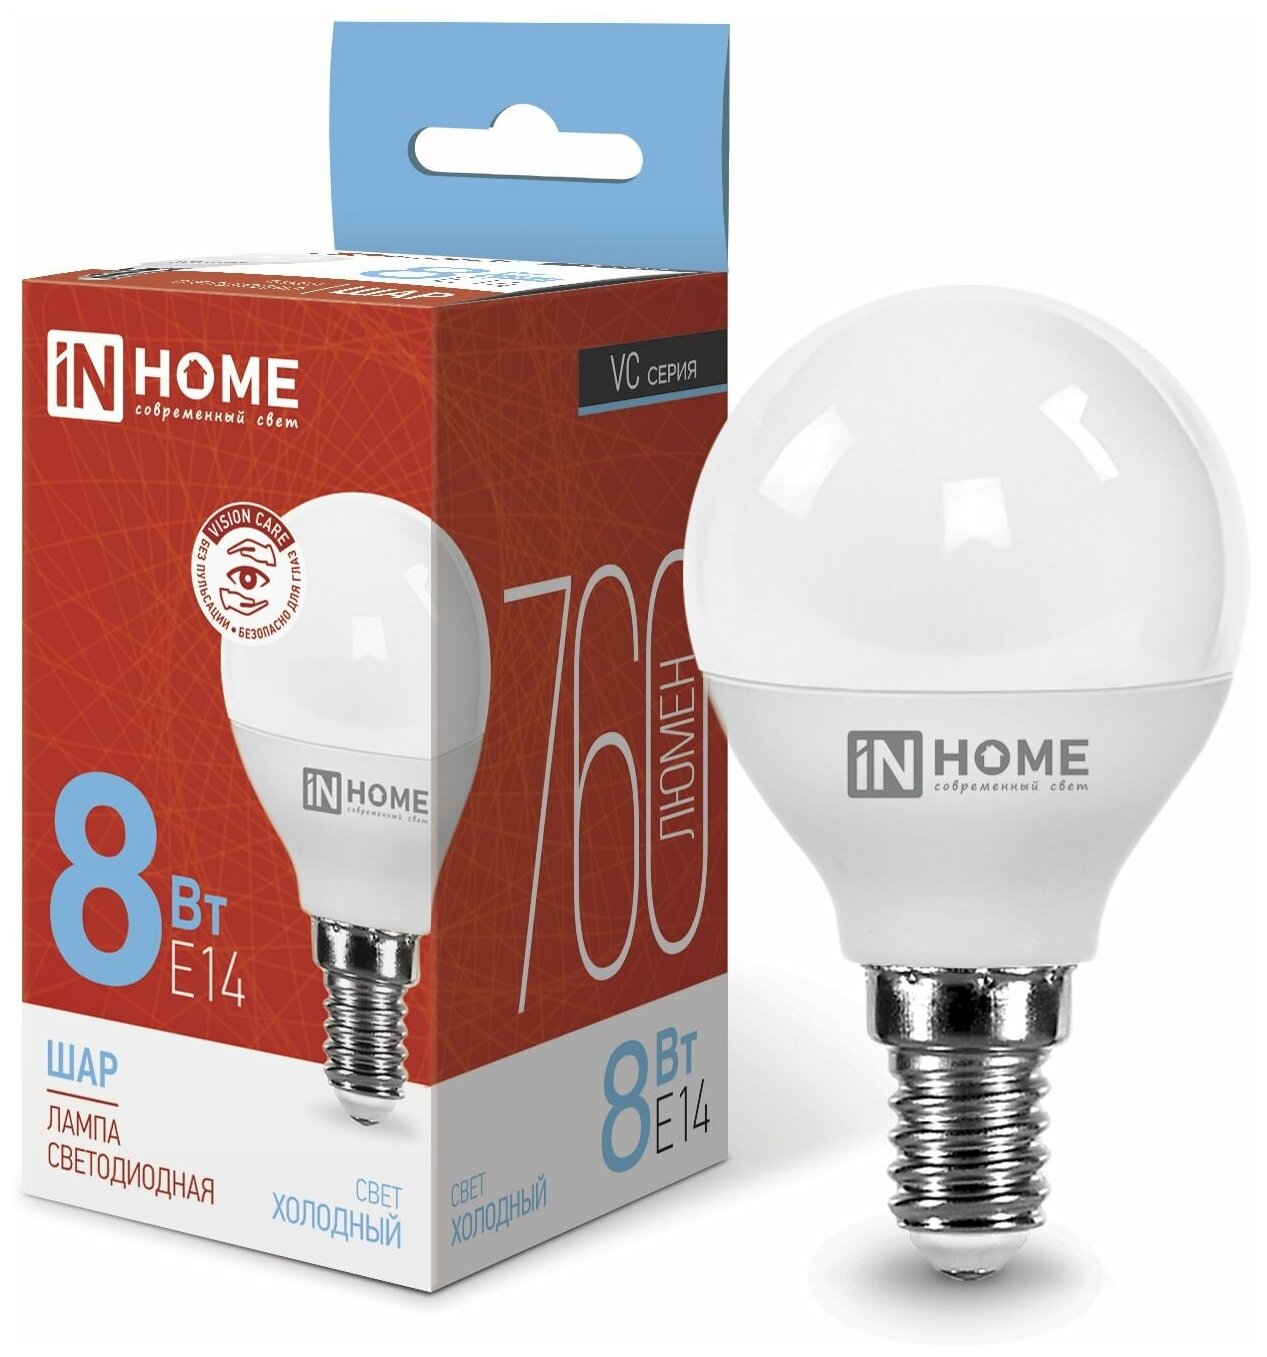 Лампа светодиодная IN HOME LED-ШАР-VC (4690612024882), E14, G45, 8 Вт, 6500 К